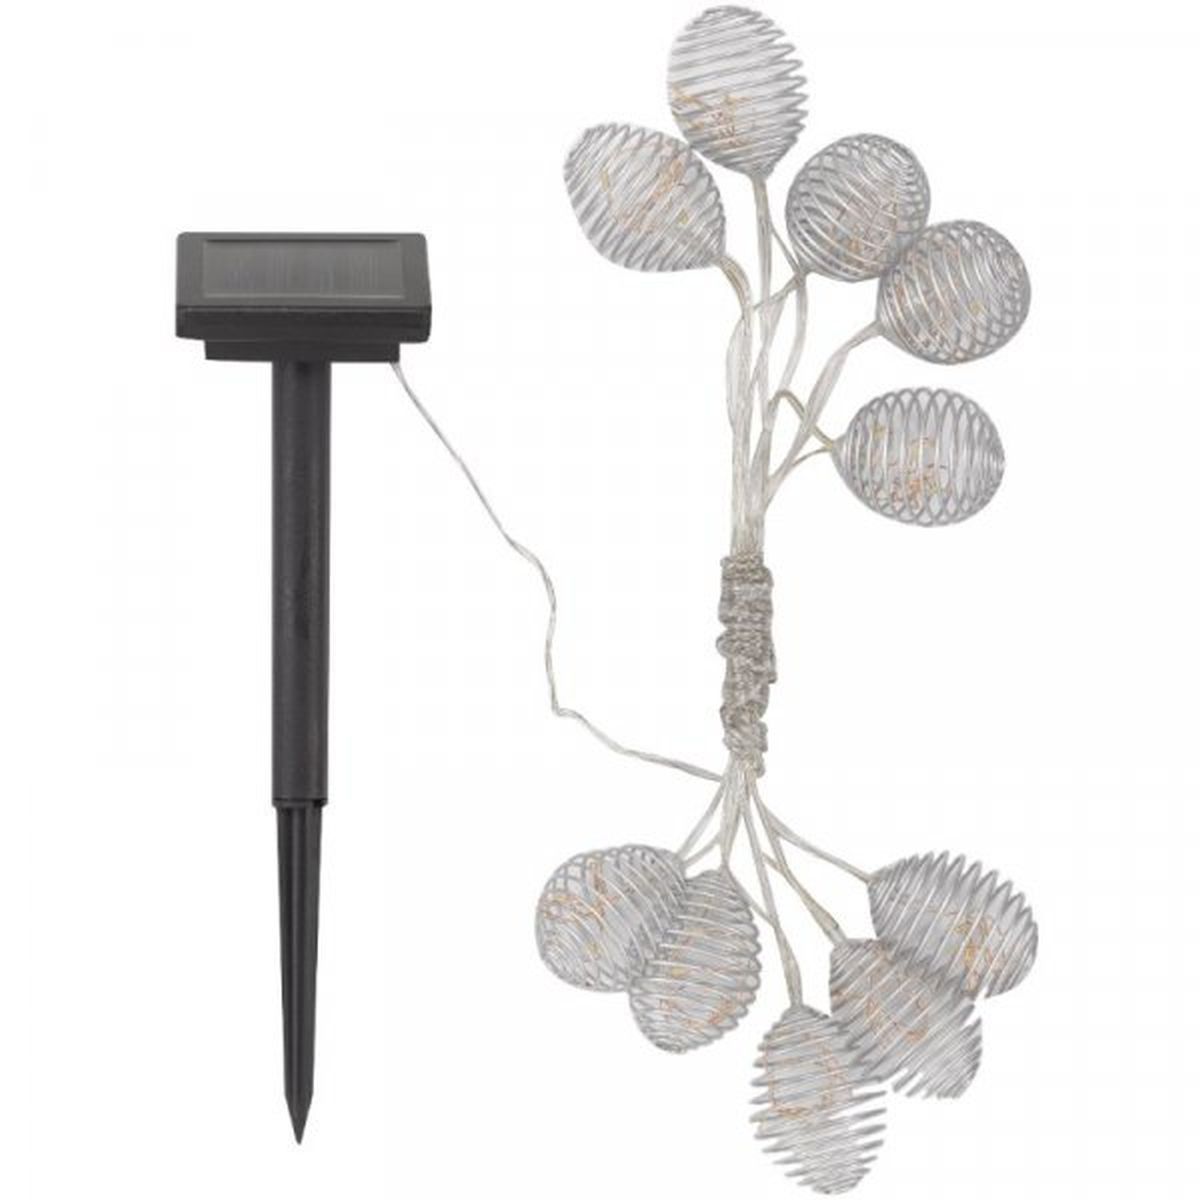 SpiraLight String Lights - Set of 10 | Smart Garden